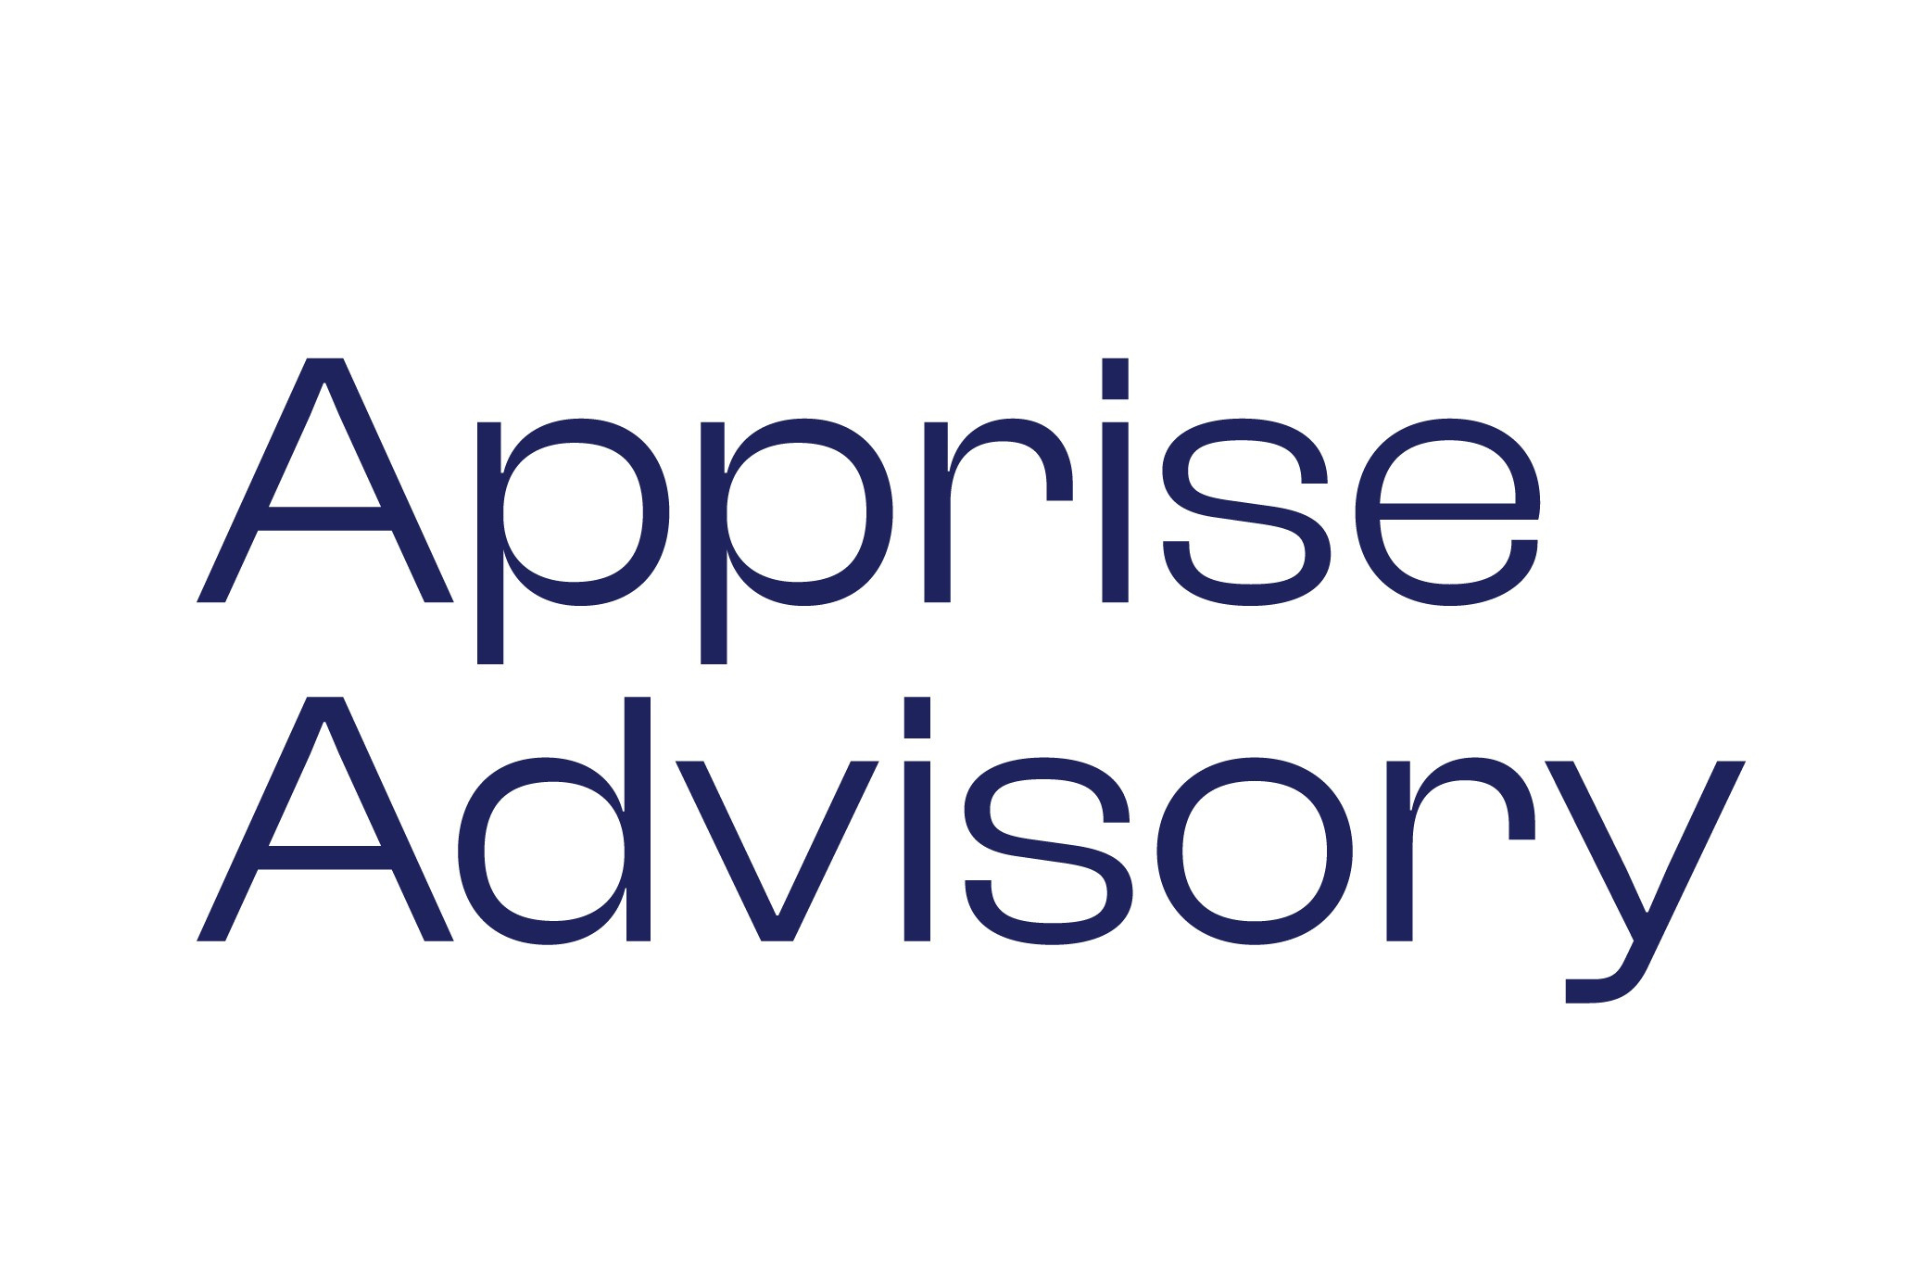 Apprise Advisory